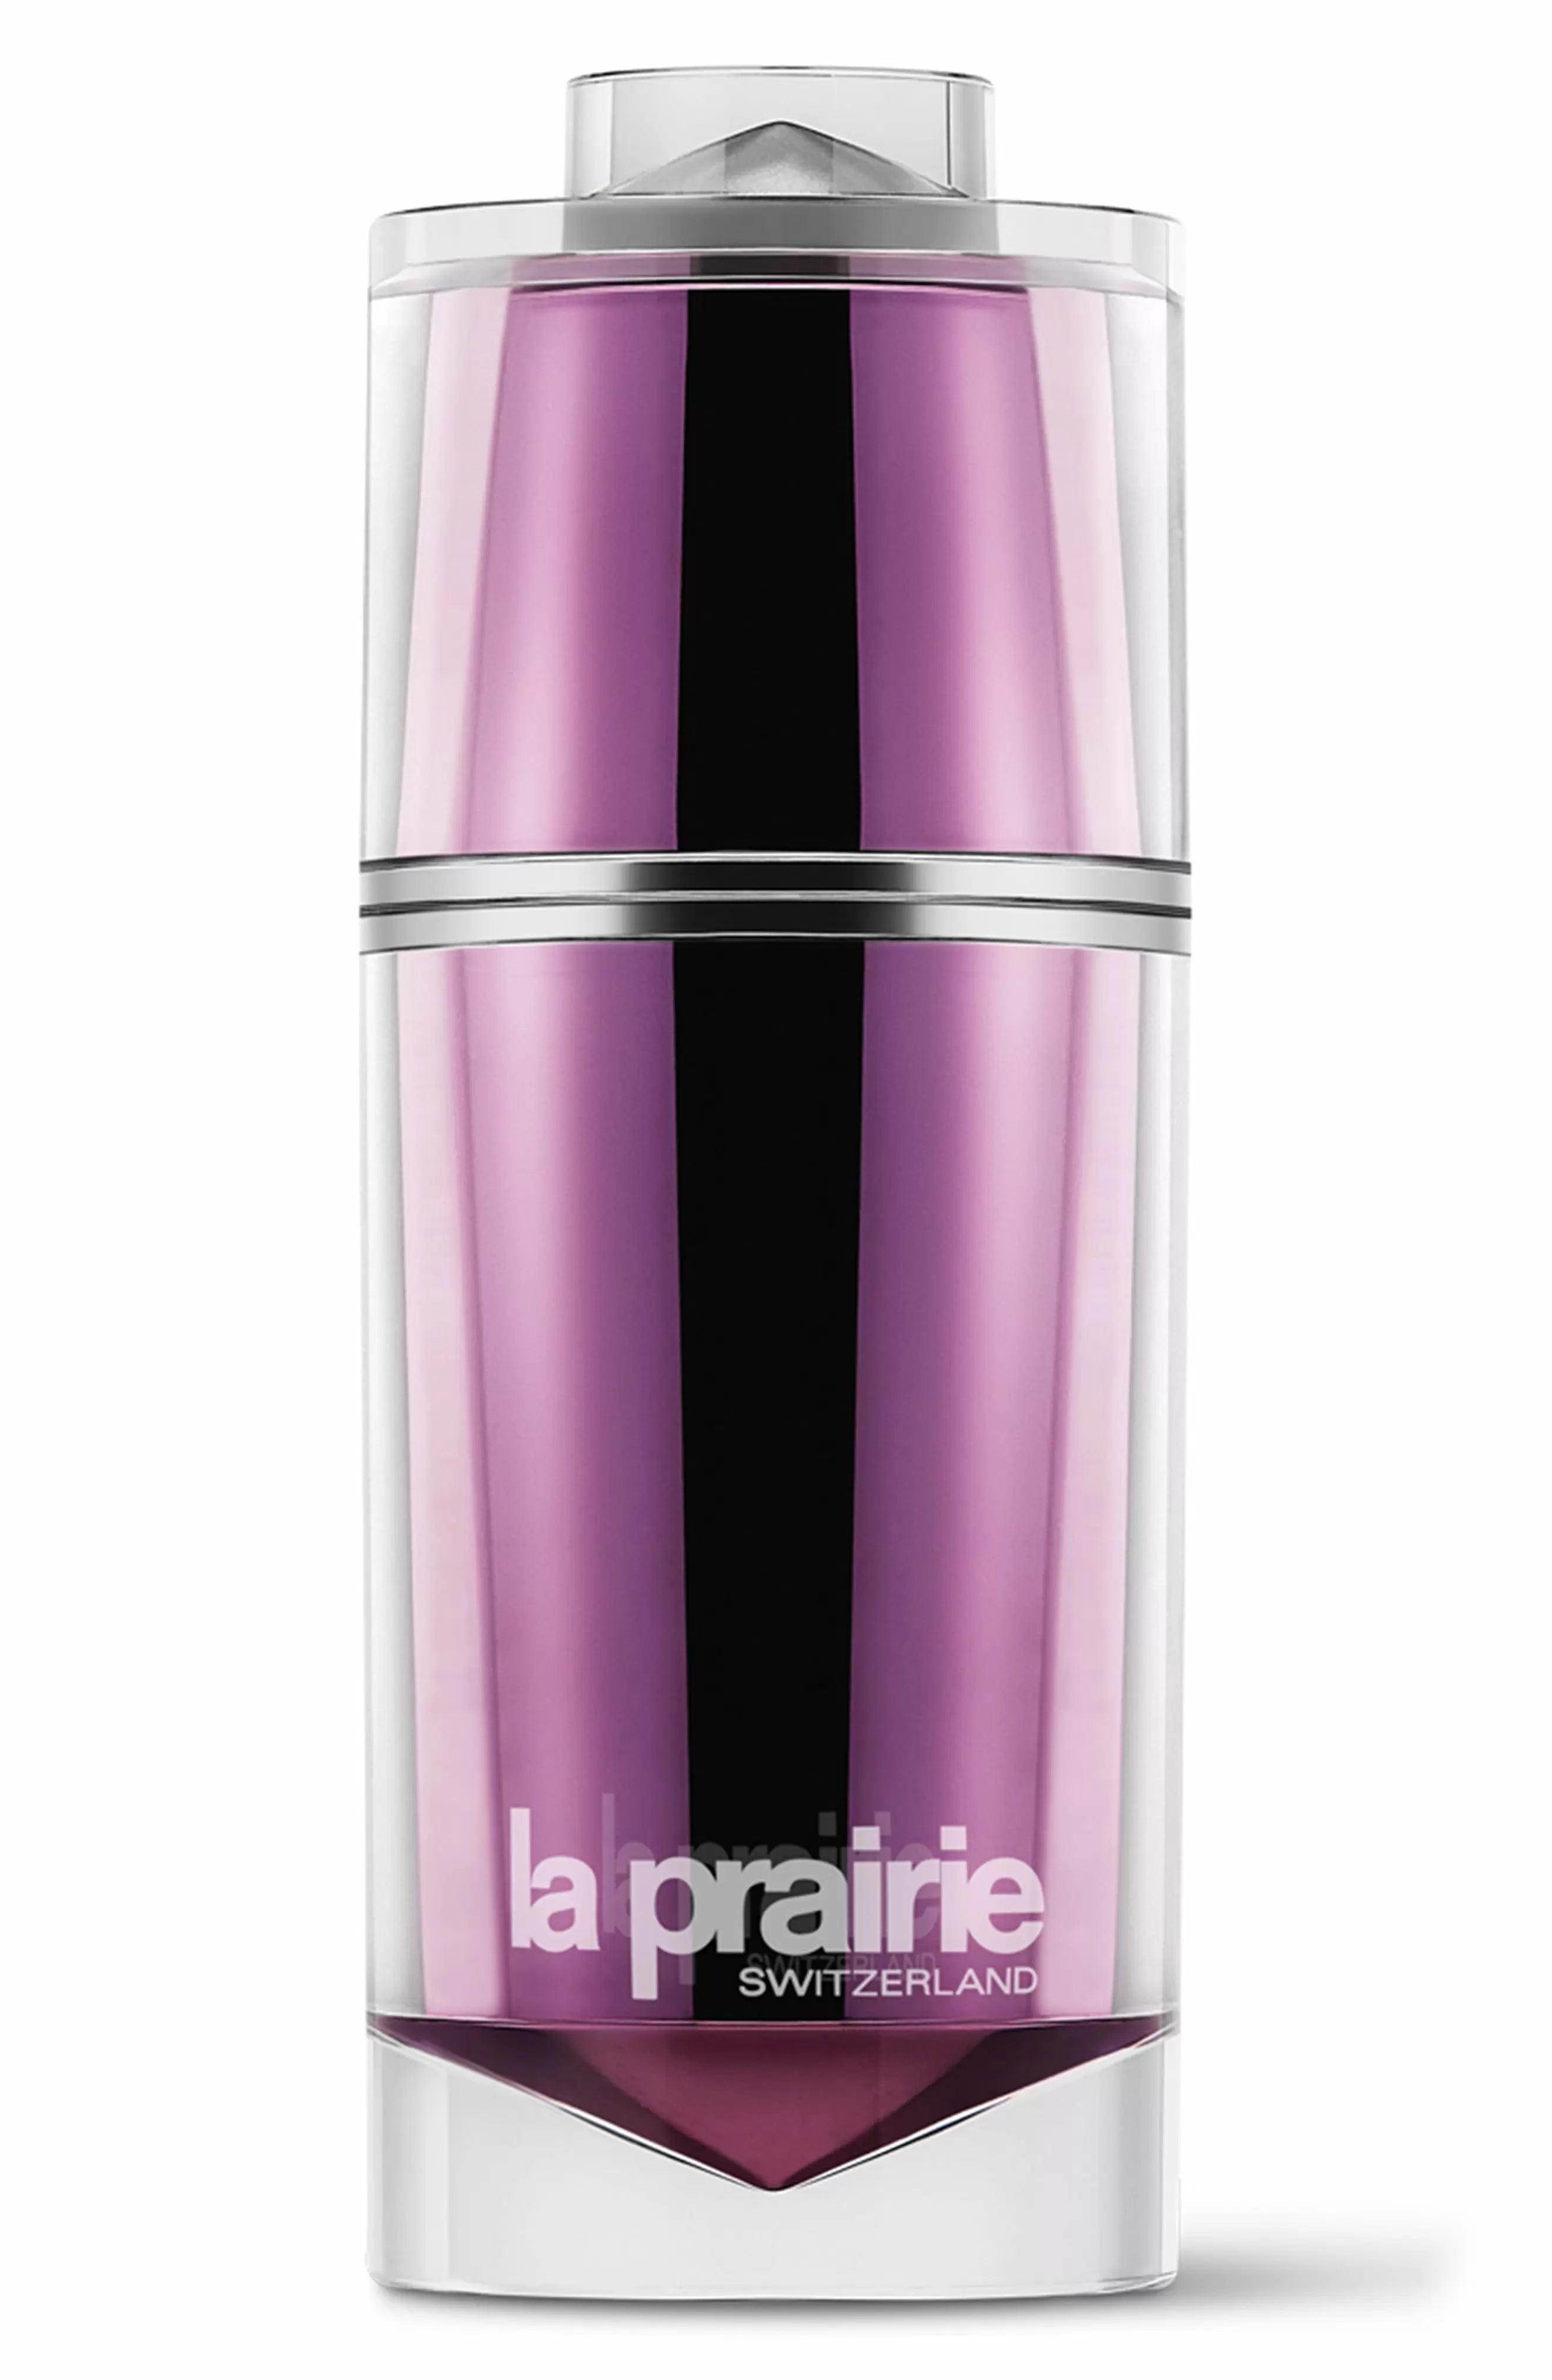 LA PRAIRIE/ Platinum Rare Haute-rejuvenation Eye Elixir 0.5 oz (15 ml)